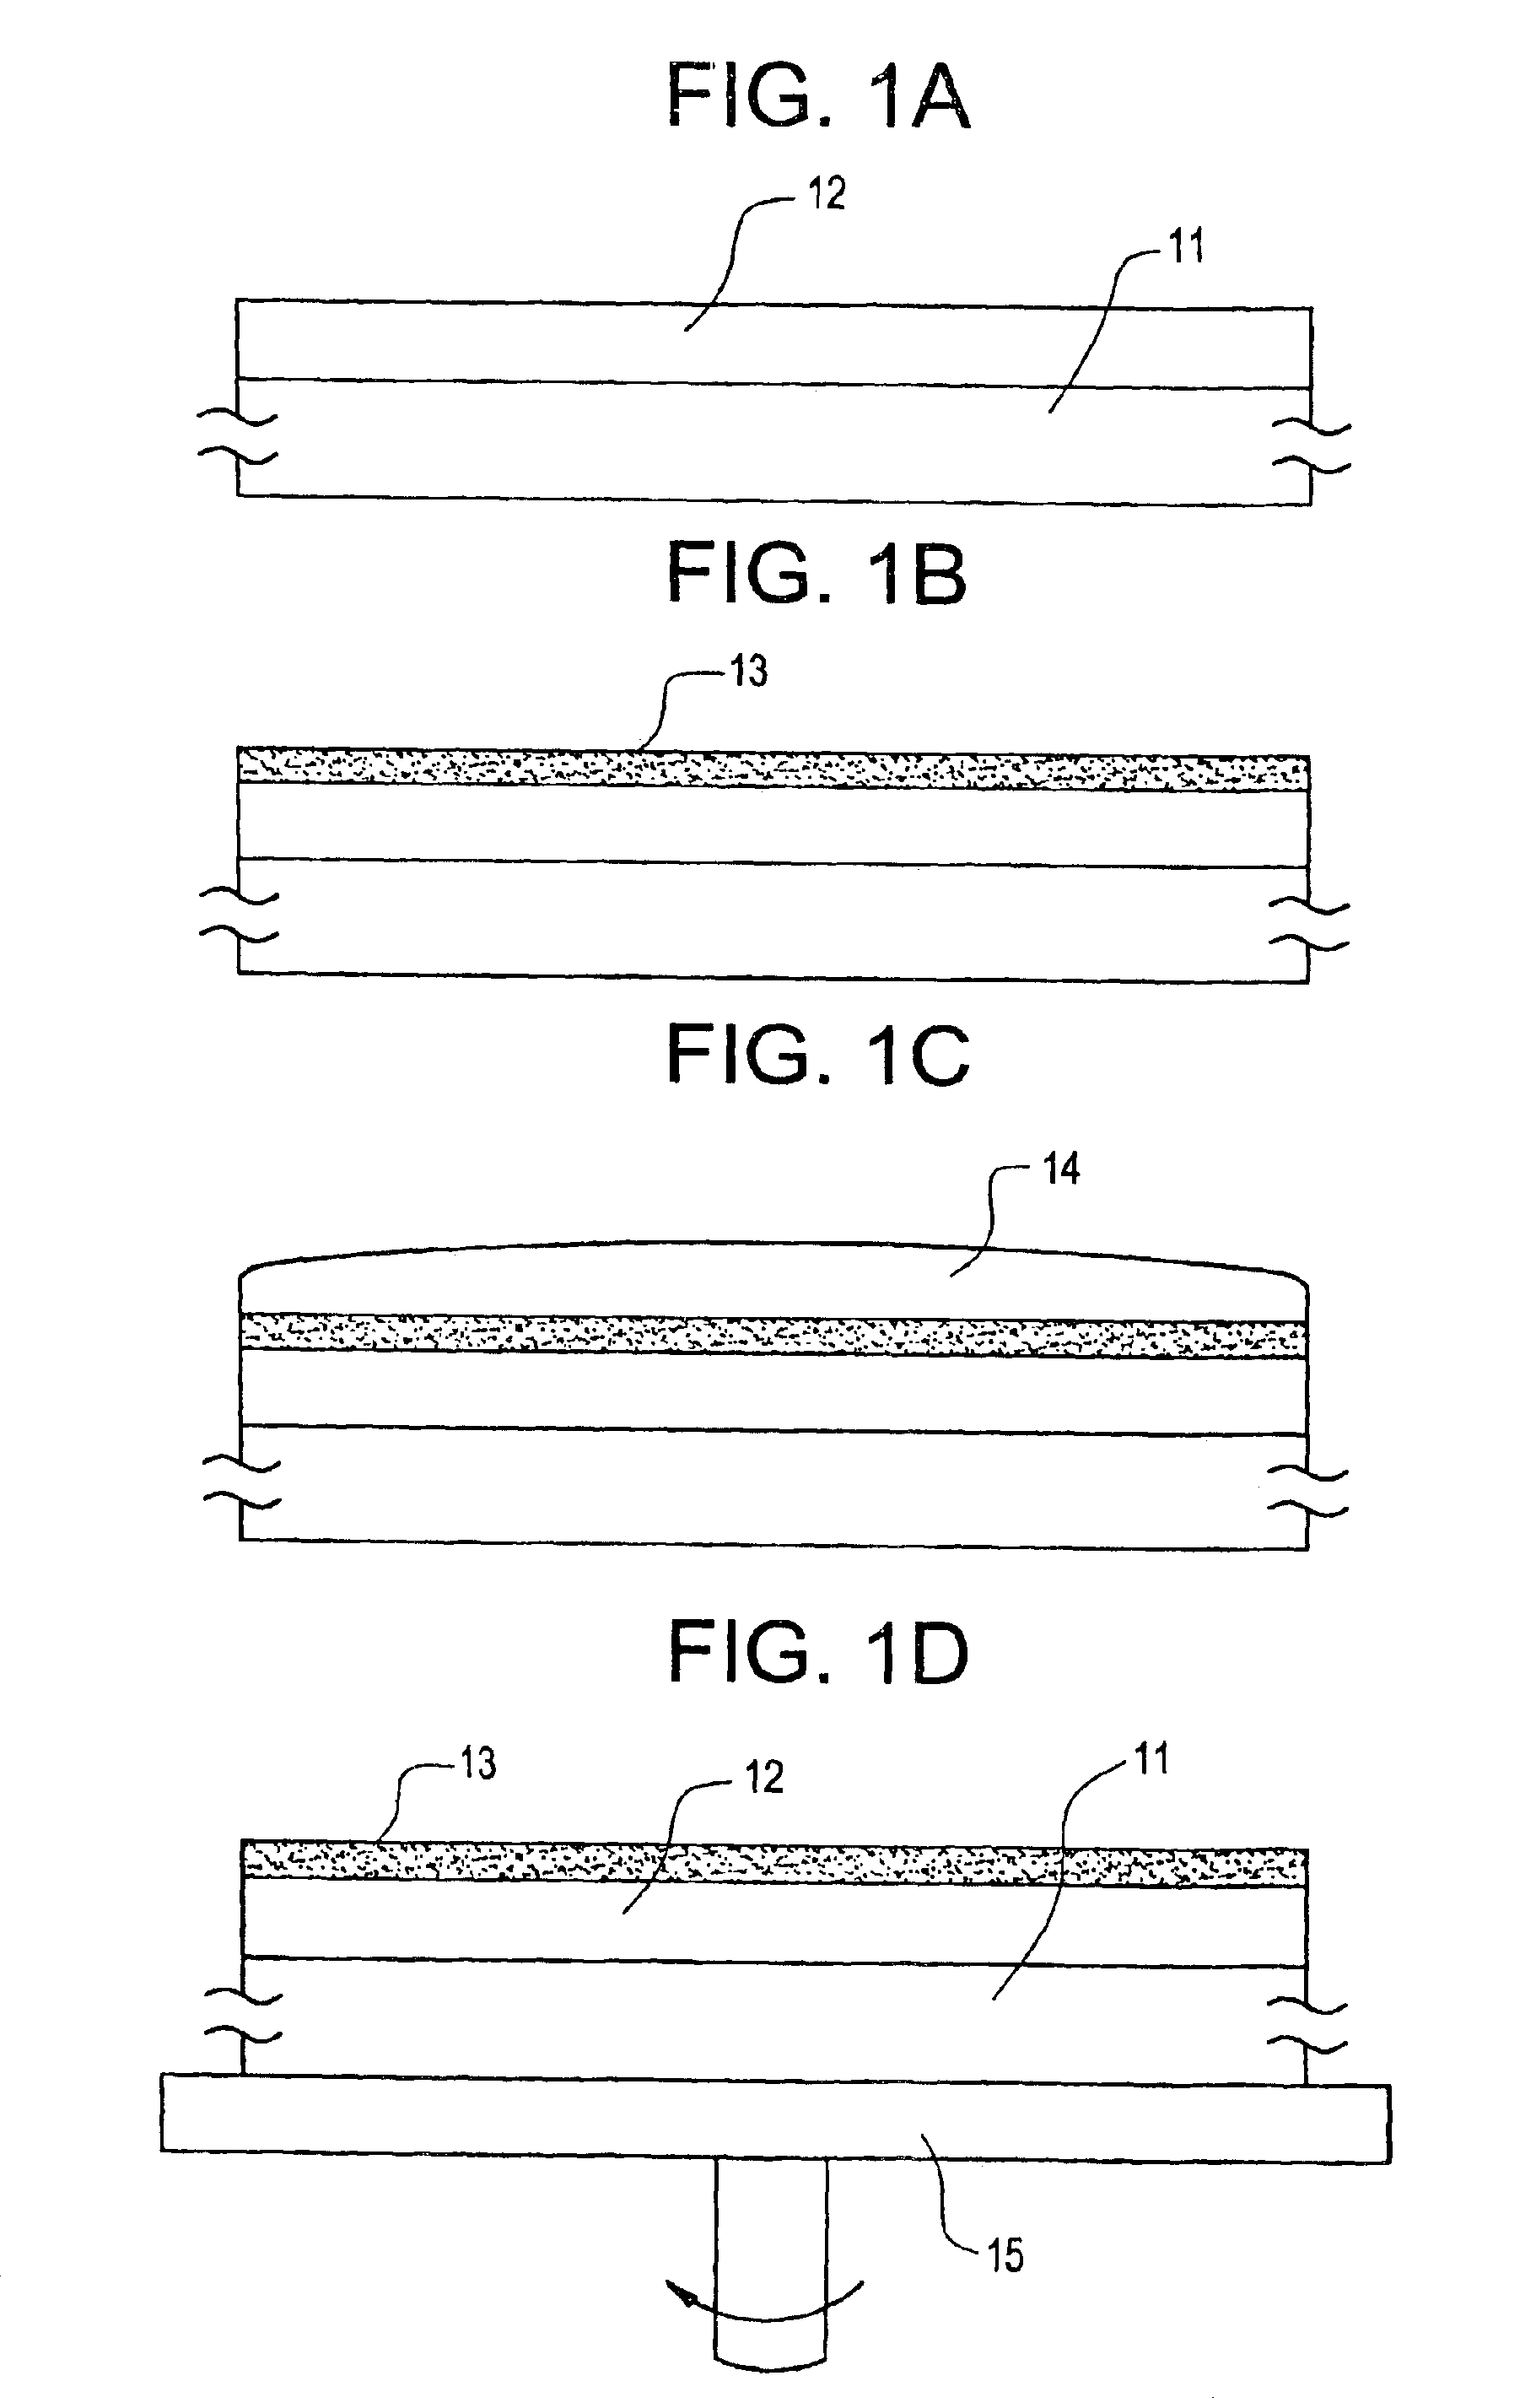 Process for fabricating thin film transistors